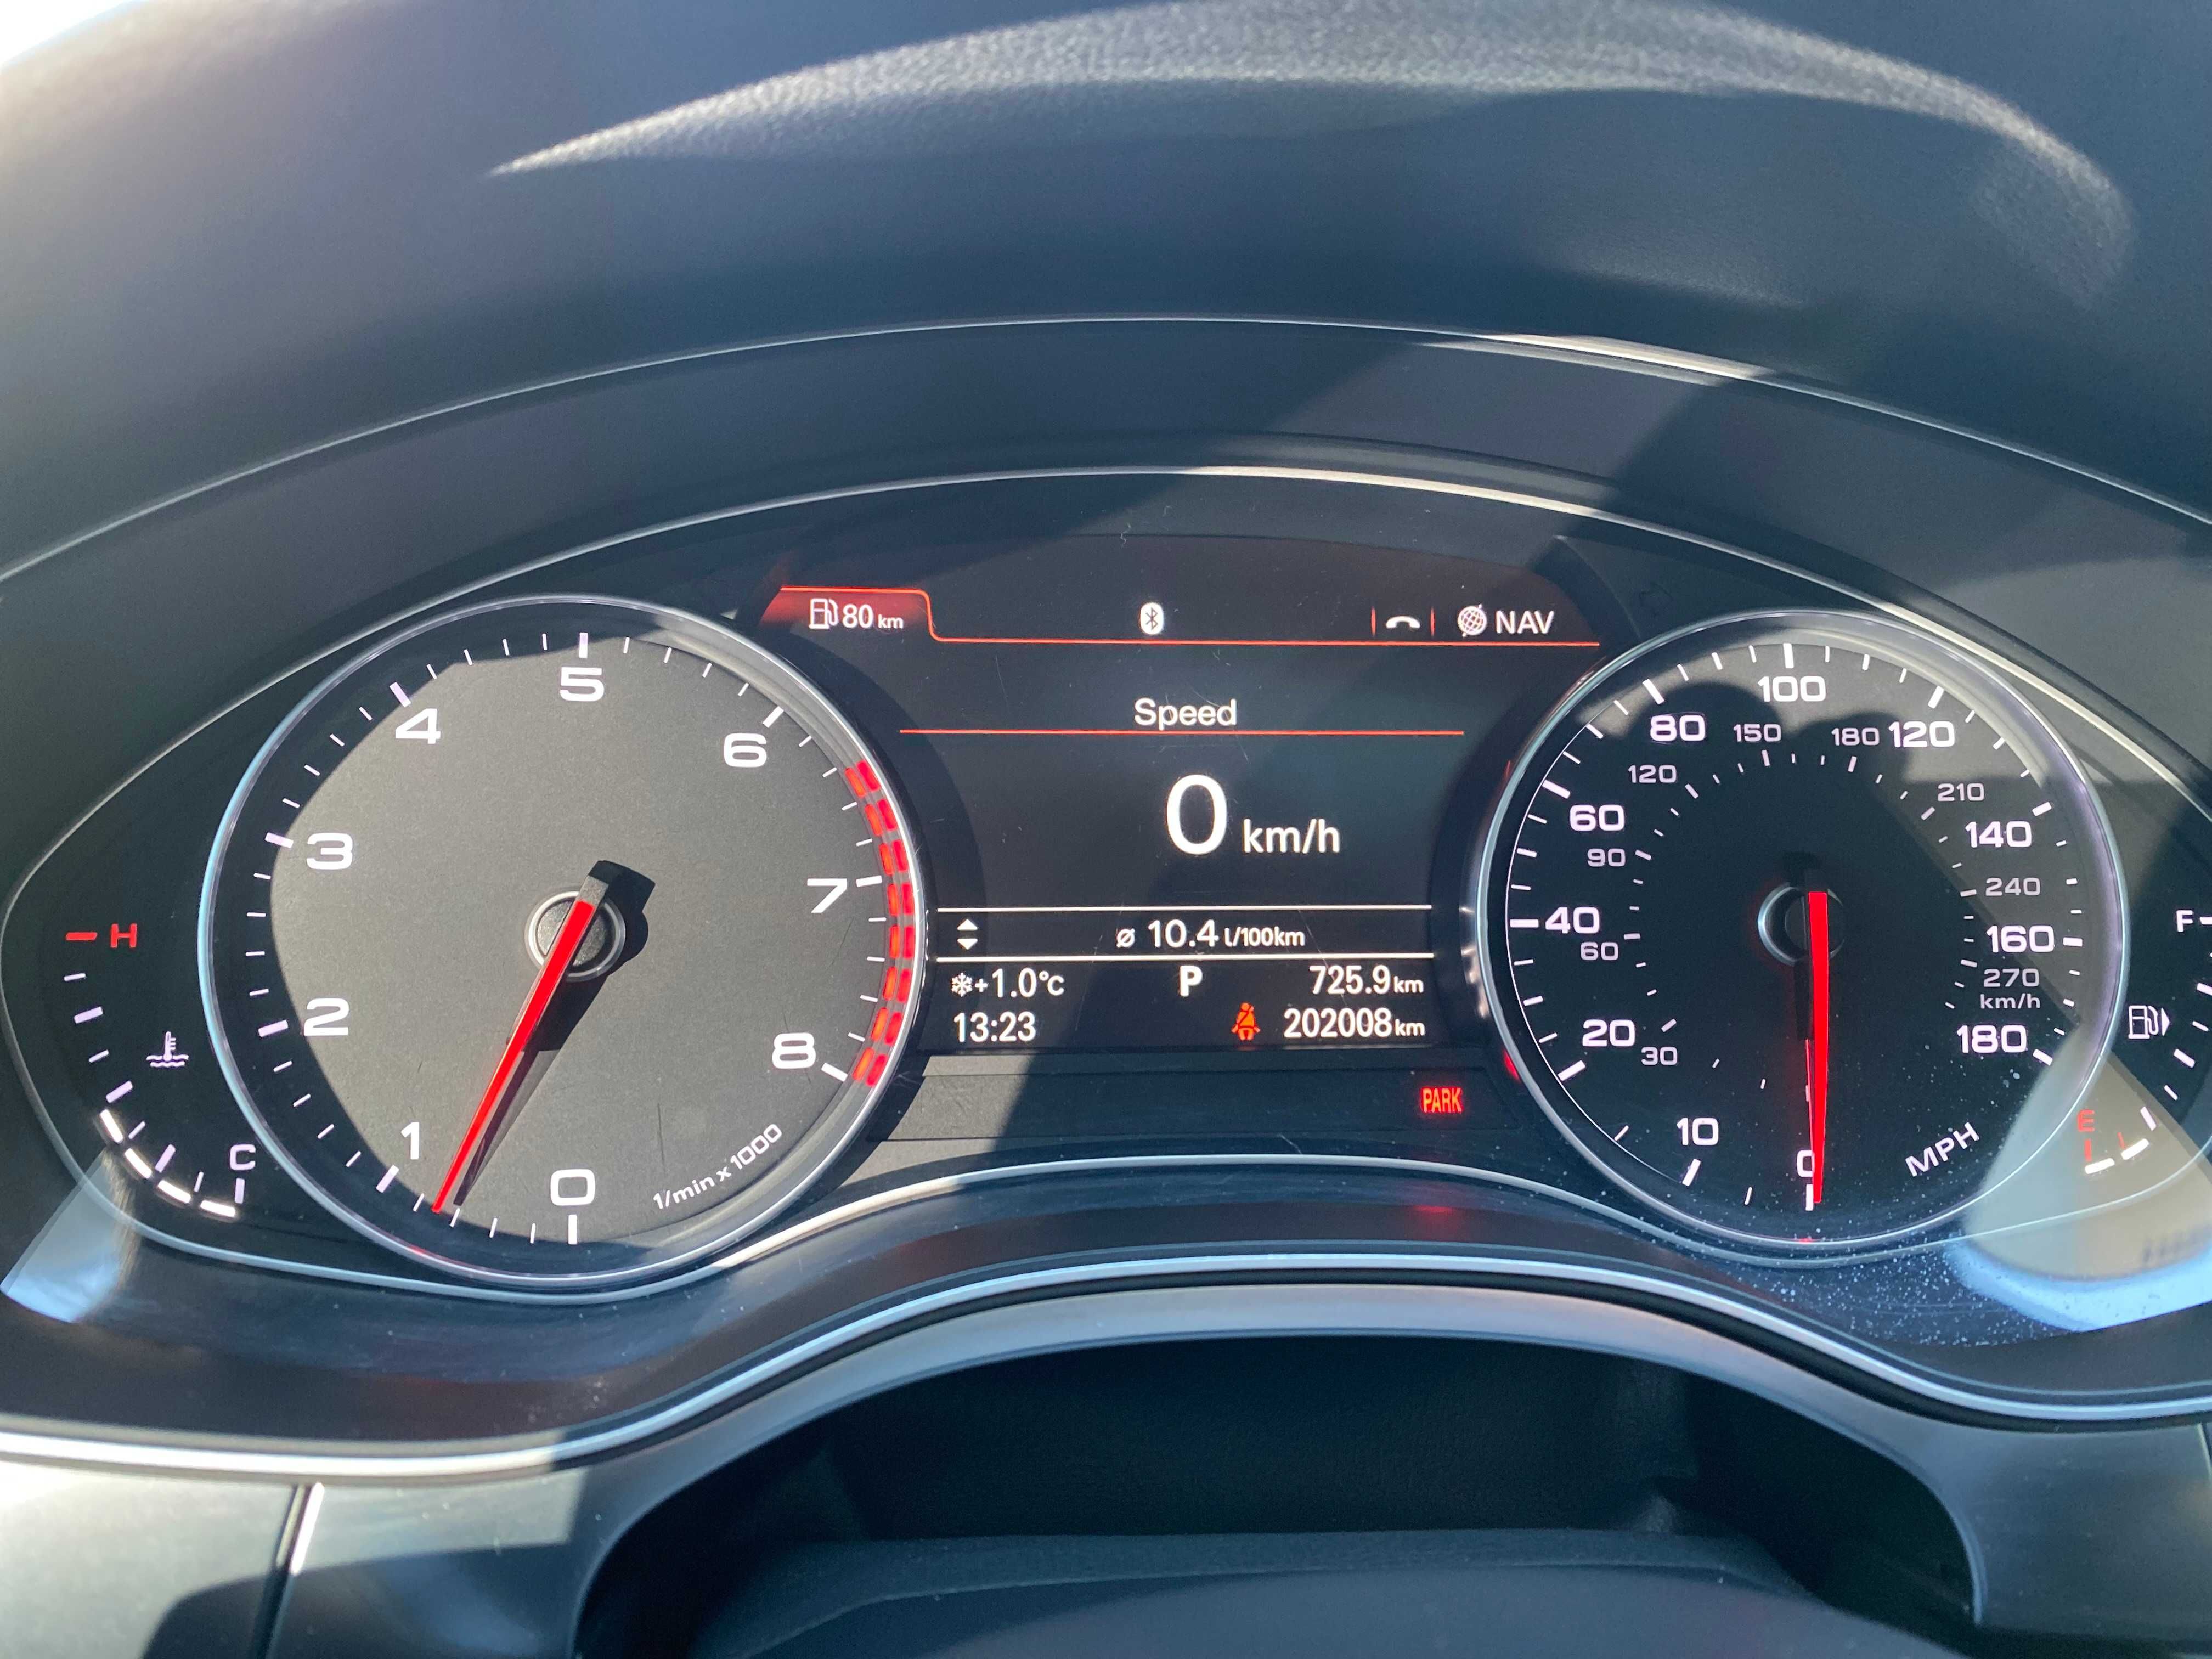 Audi A6 C7, 2014 год, 3.0 бензин